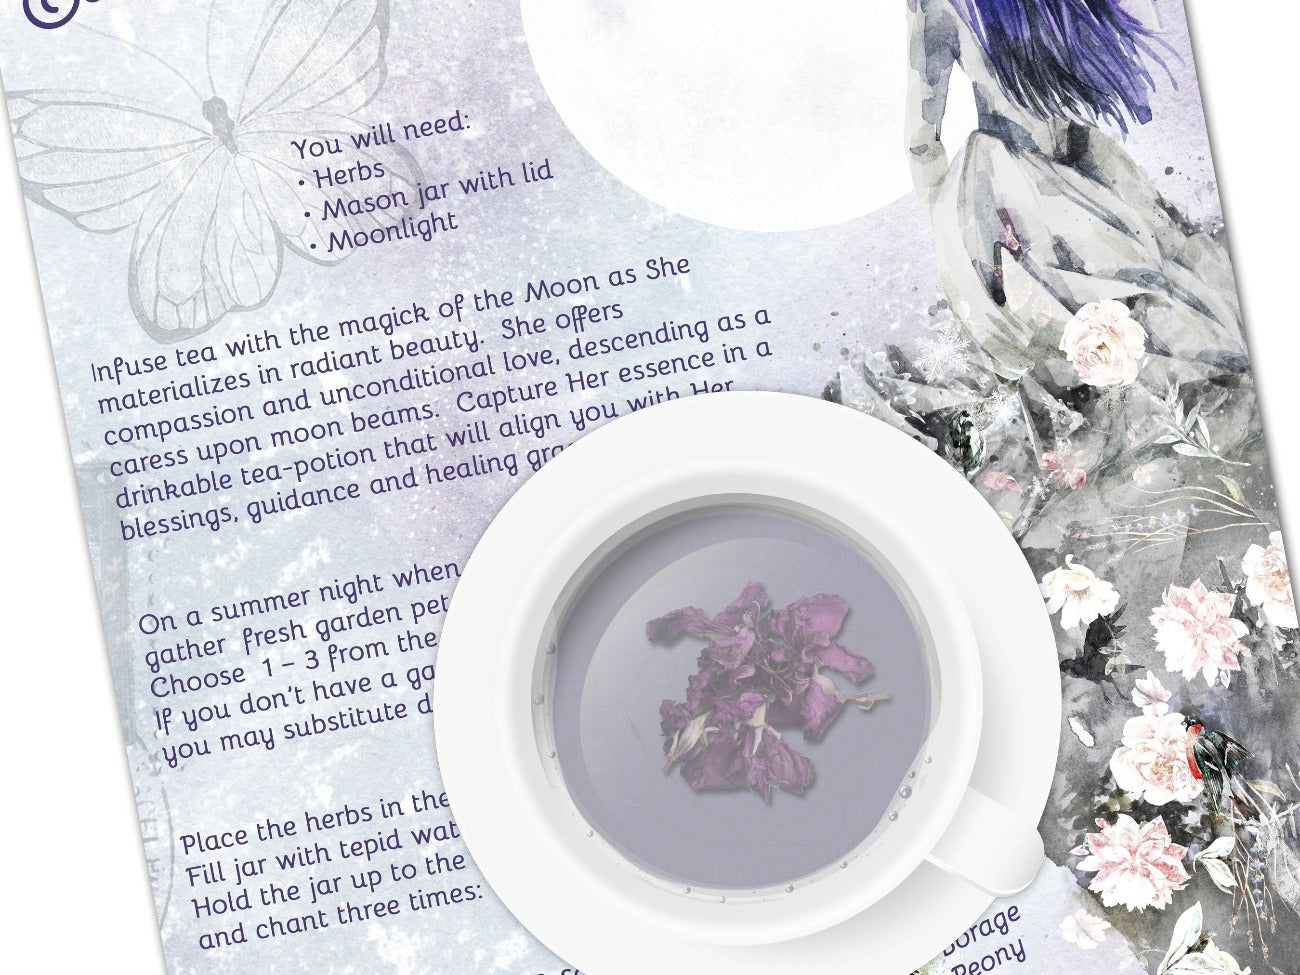 SUMMER MOON TEA Recipe, Witches Tea, close-up view - Morgana Magick Spell